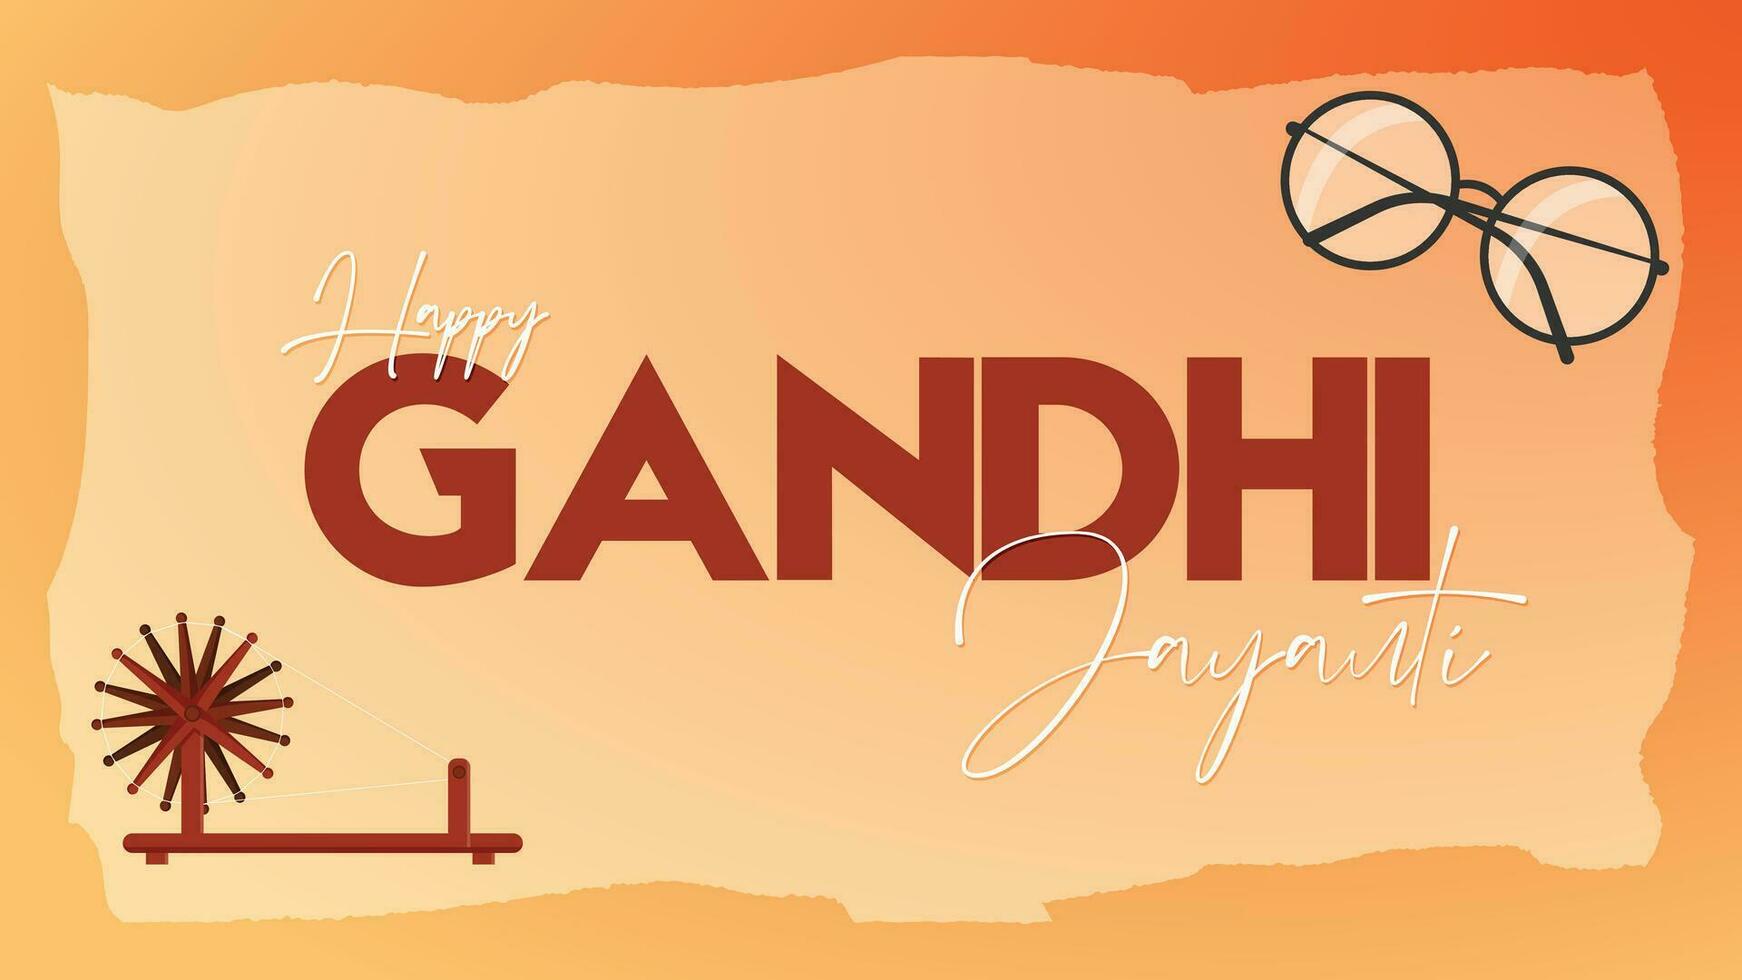 mahatma Gandhi jayanti - 2e octobre avec Créatif conception vecteur illustration